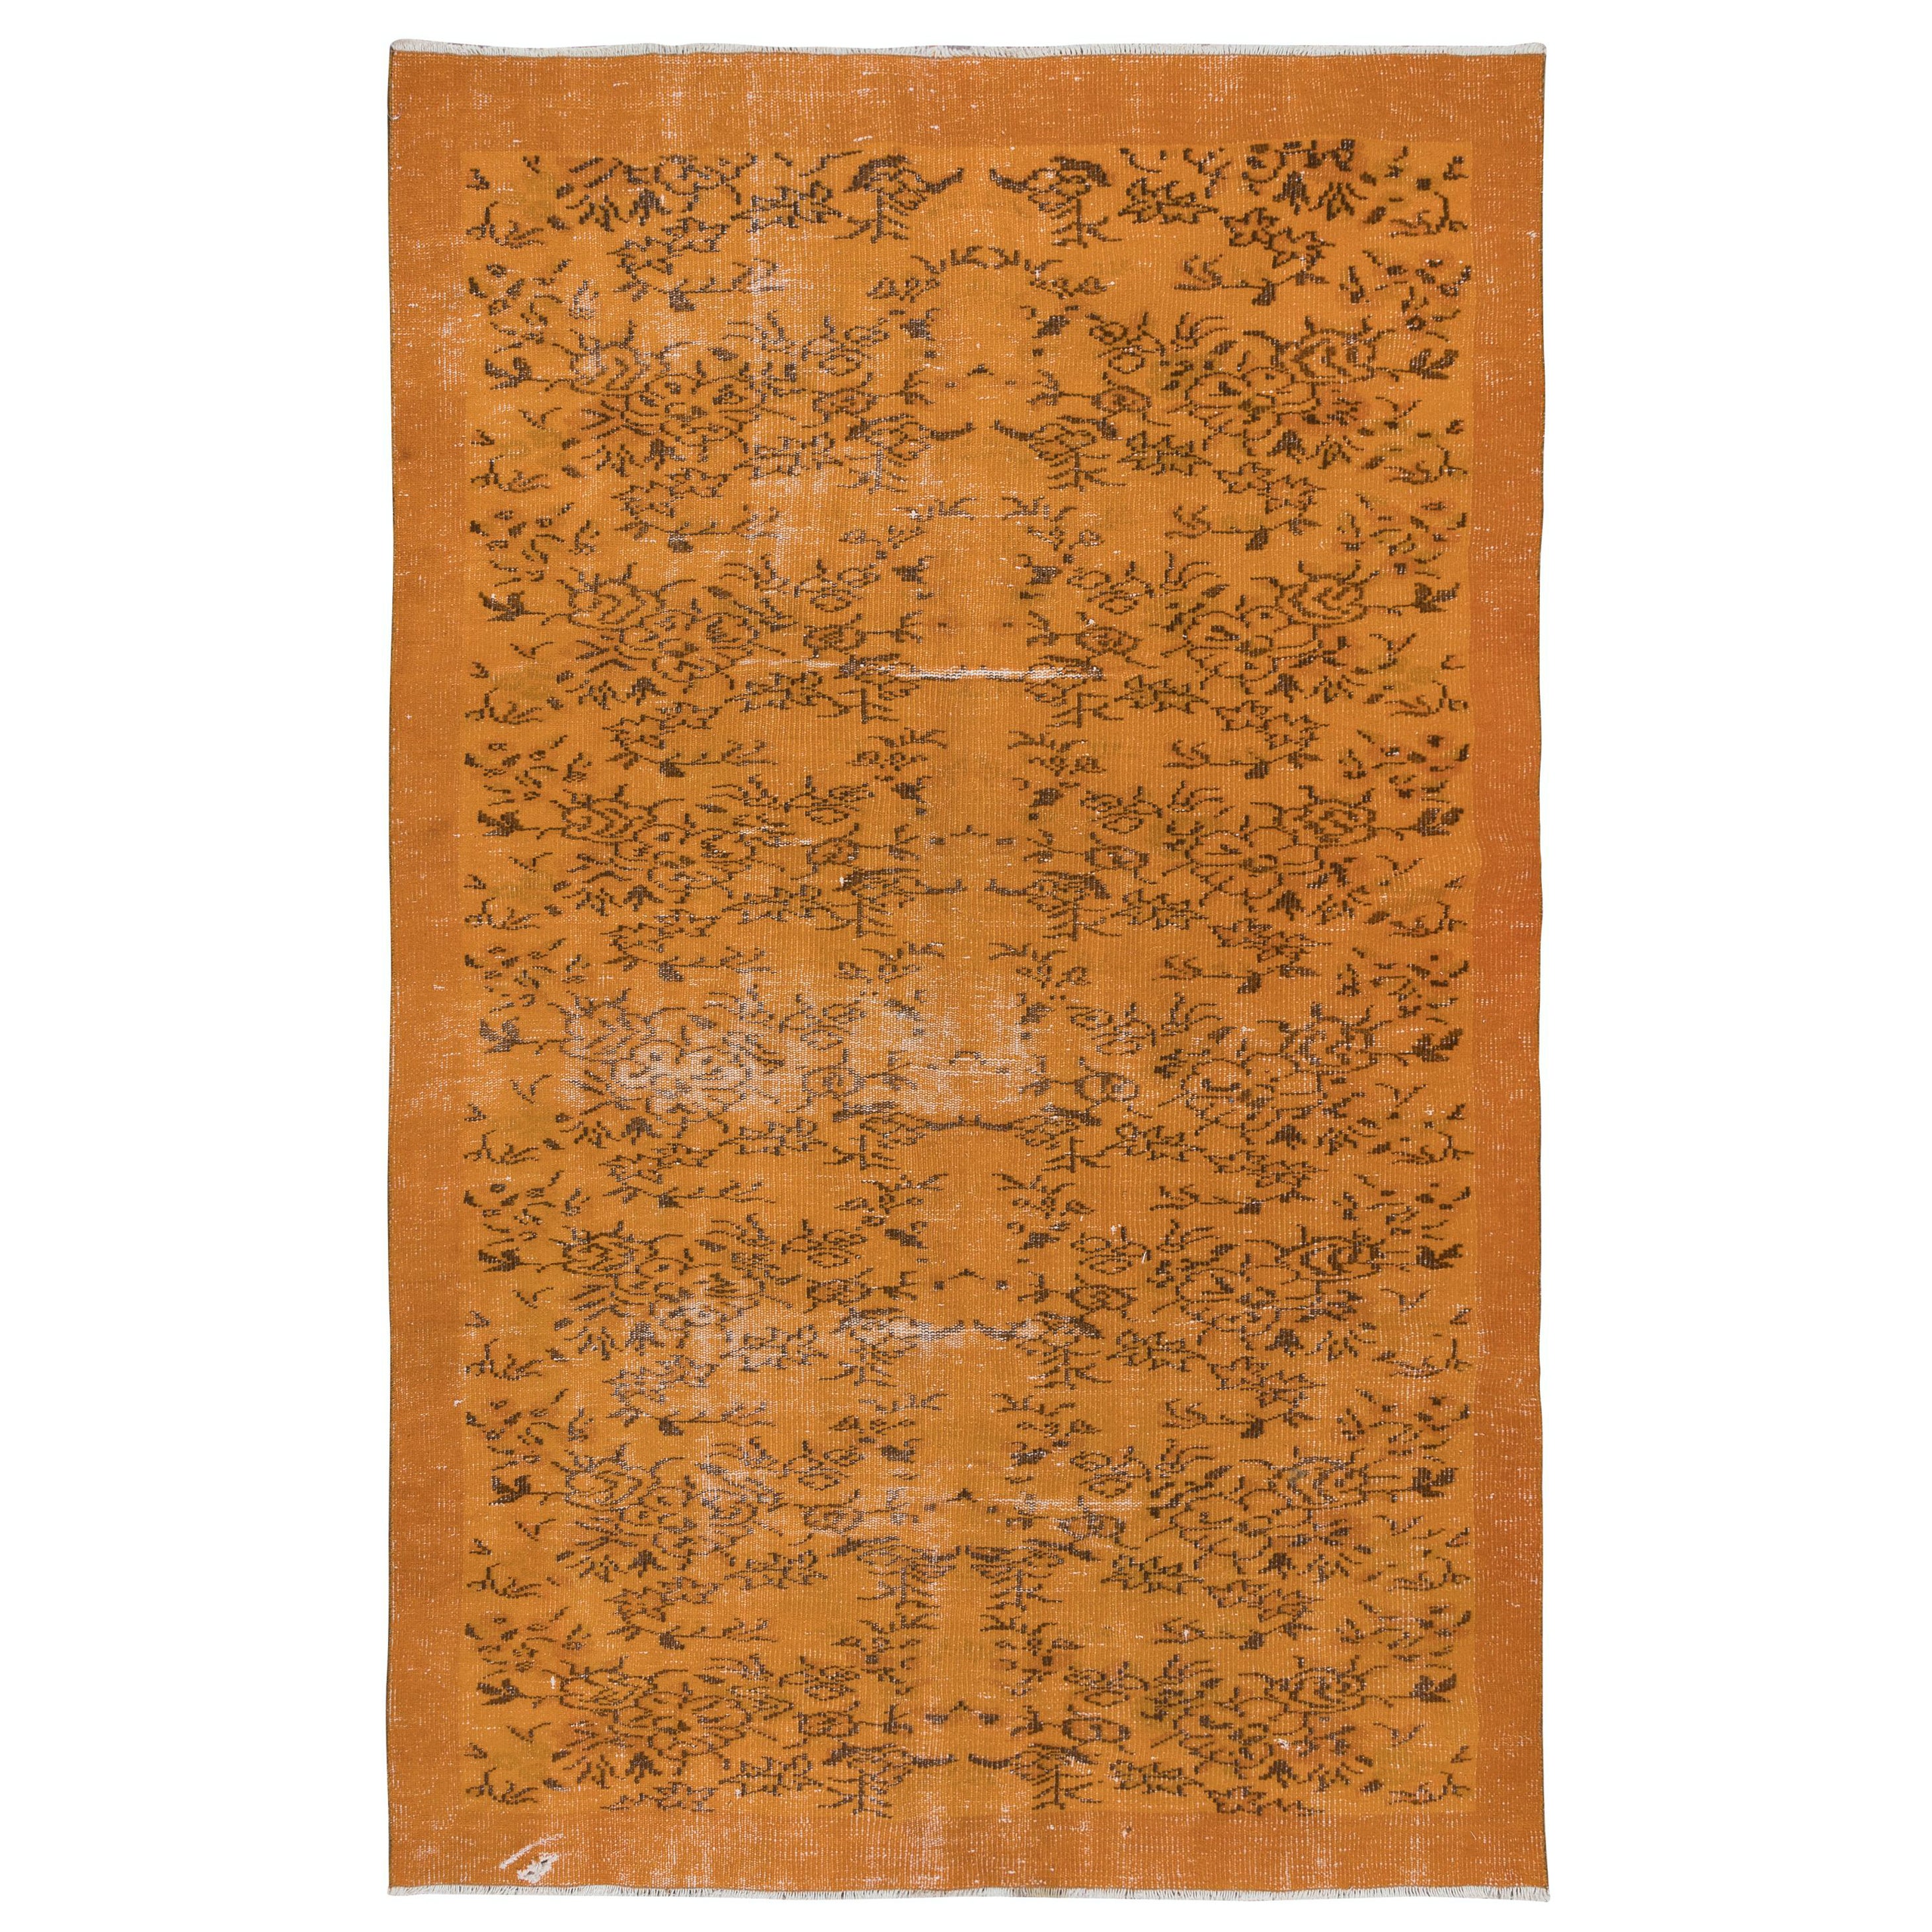 6x8.8 Ft Handmade Turkish Rug in Orange, Ideal for Modern Interiors